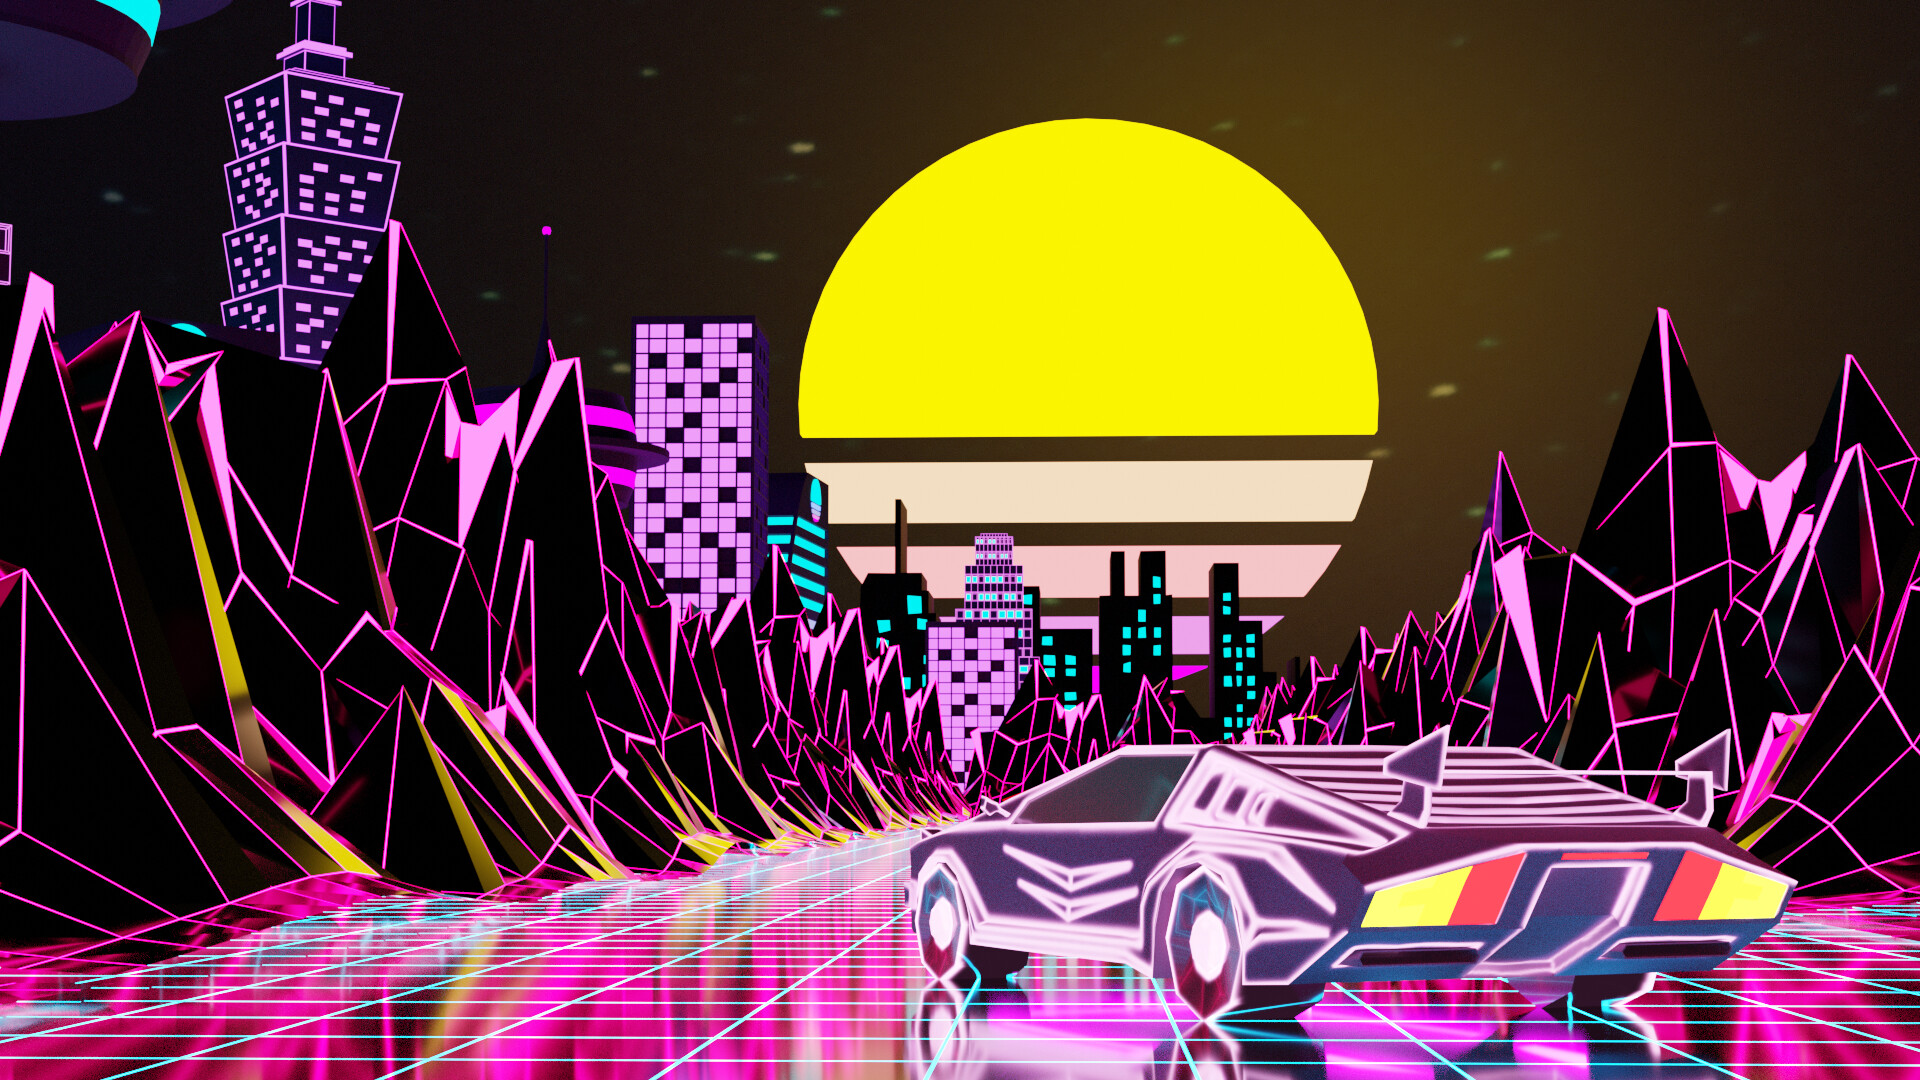 ArtStation - Racing vaporwave style videogame